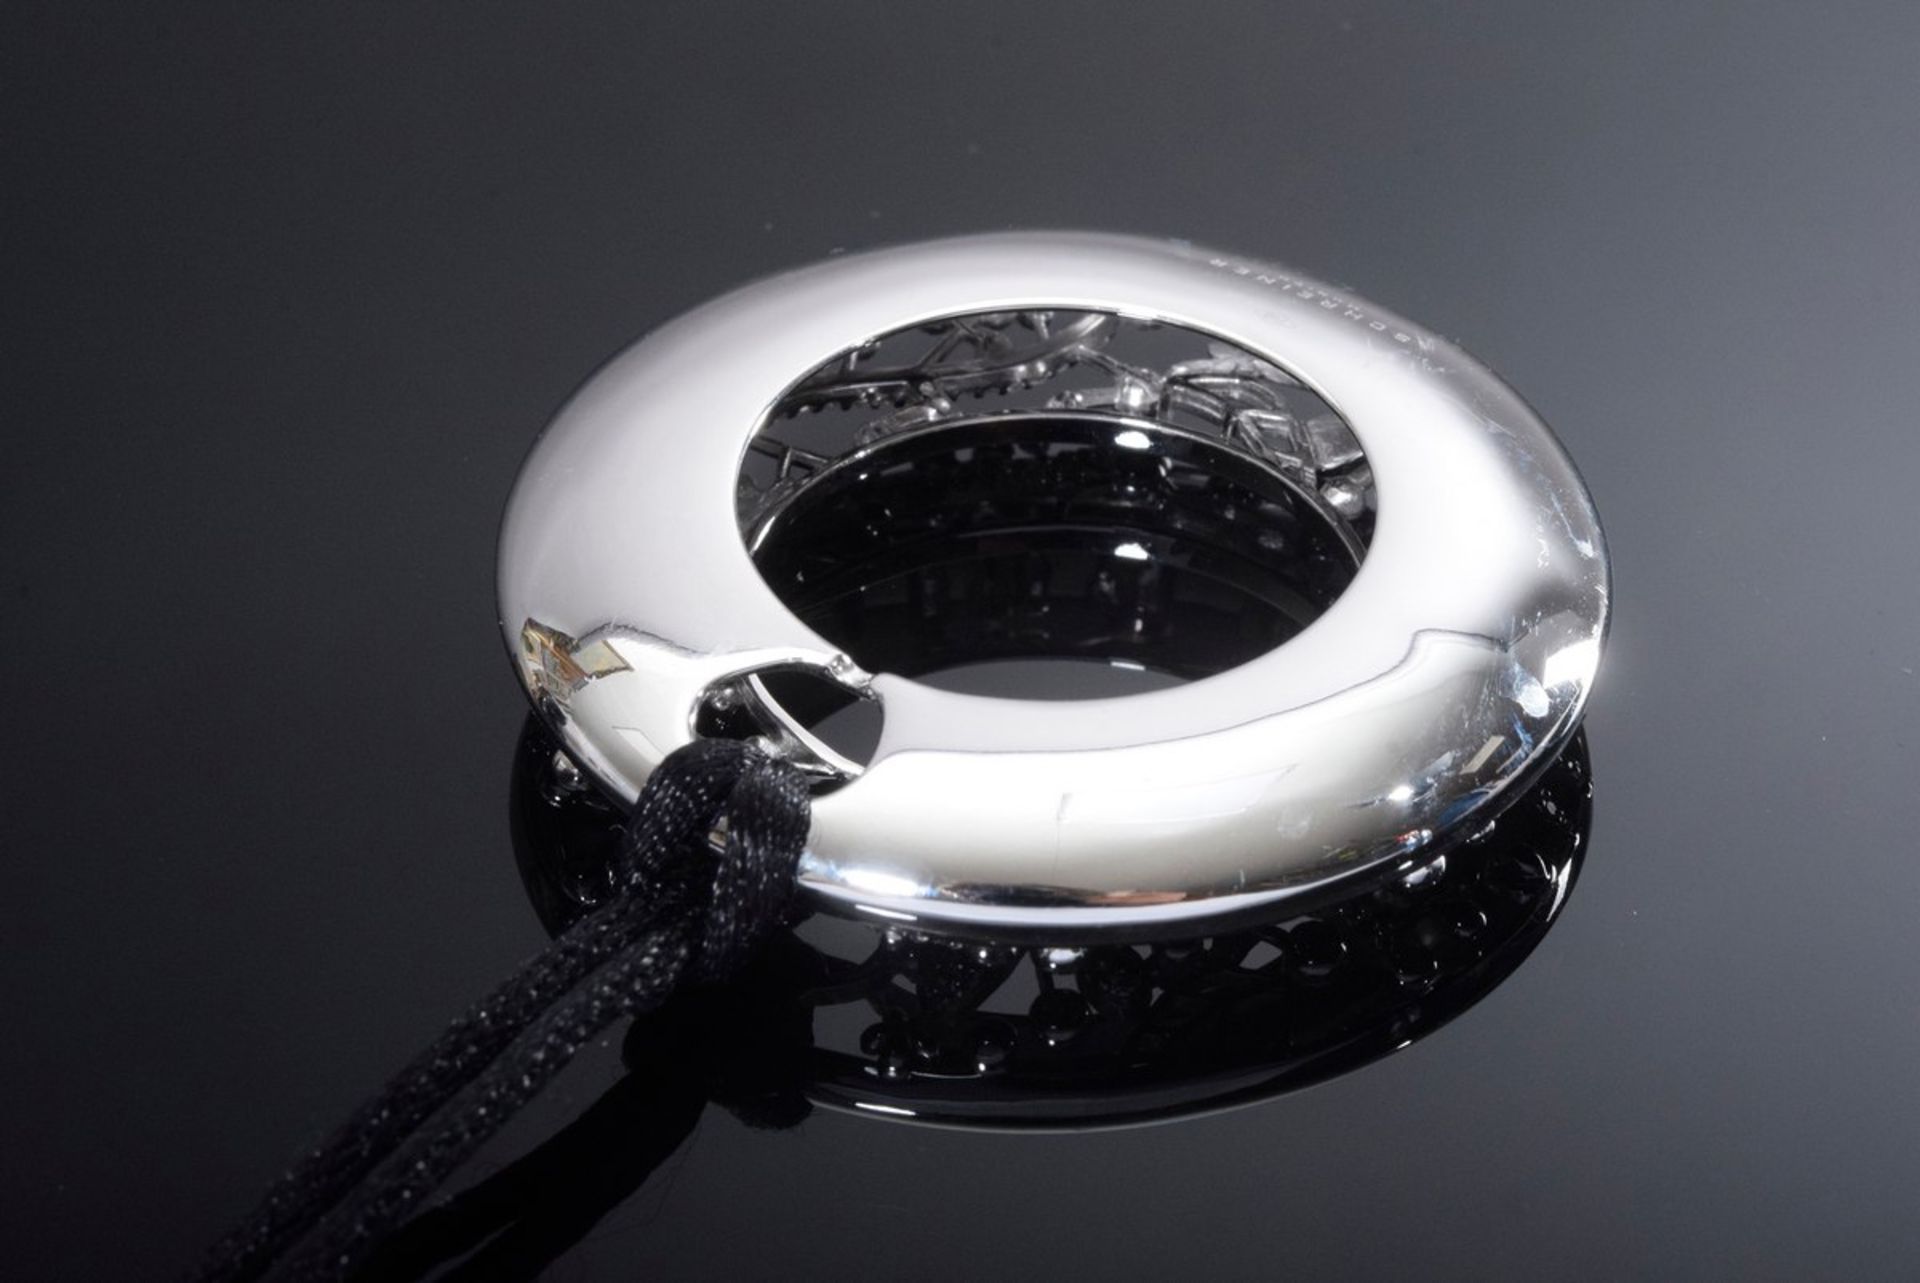 Ausdrucksstarker WG 750 "Donut" Anhänger an schwarzem Seidenband, durchbrochen im floralen Design - Bild 3 aus 4